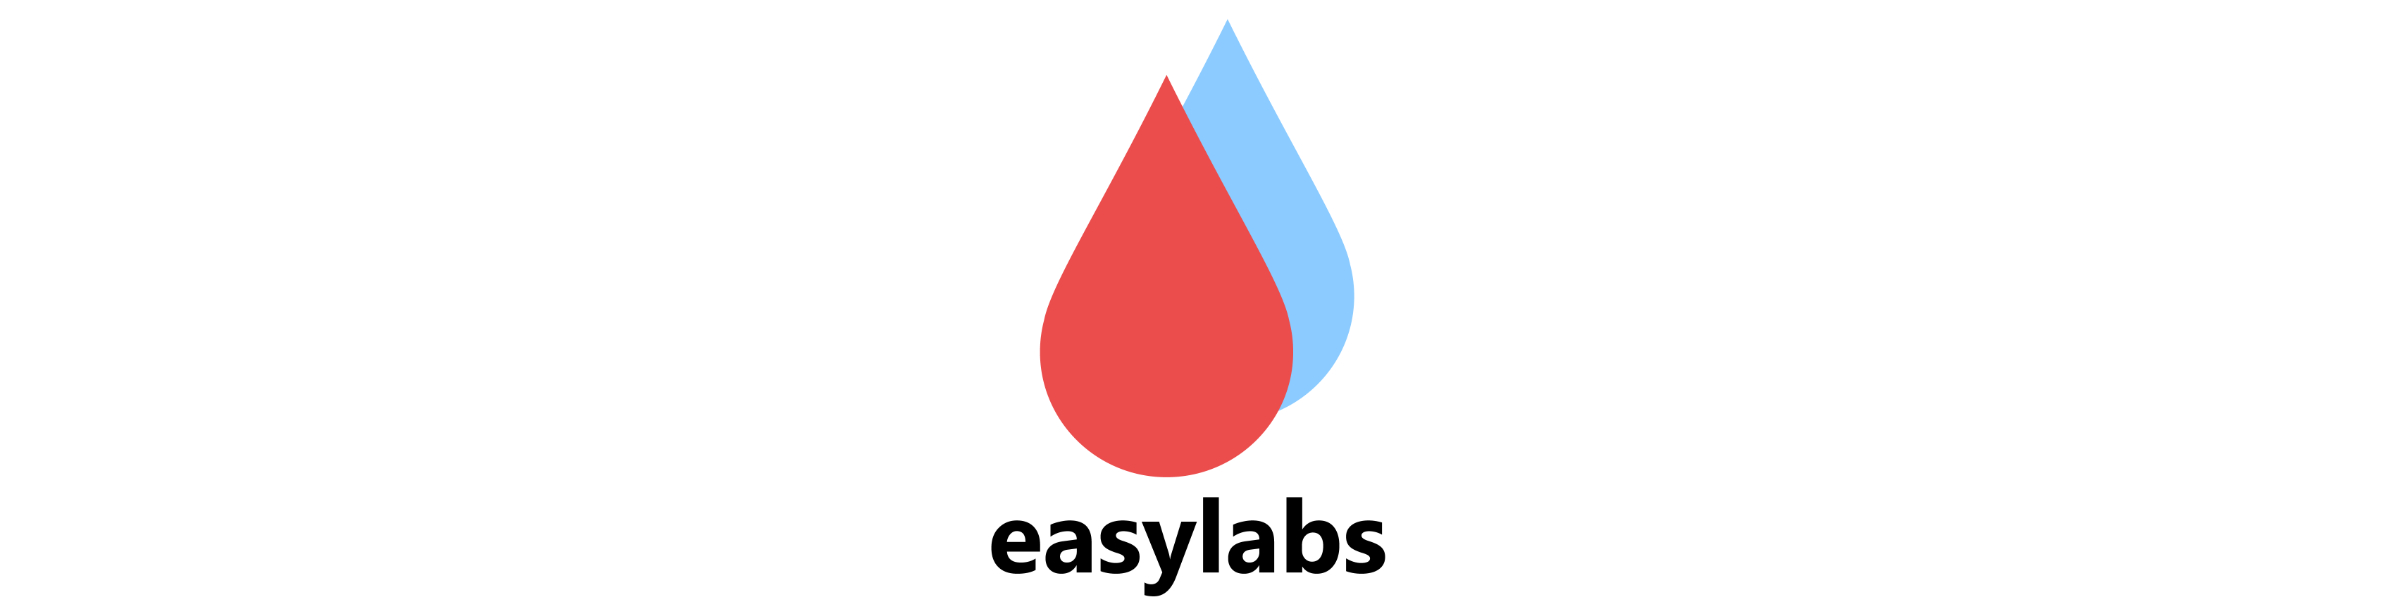 Easylabs logo